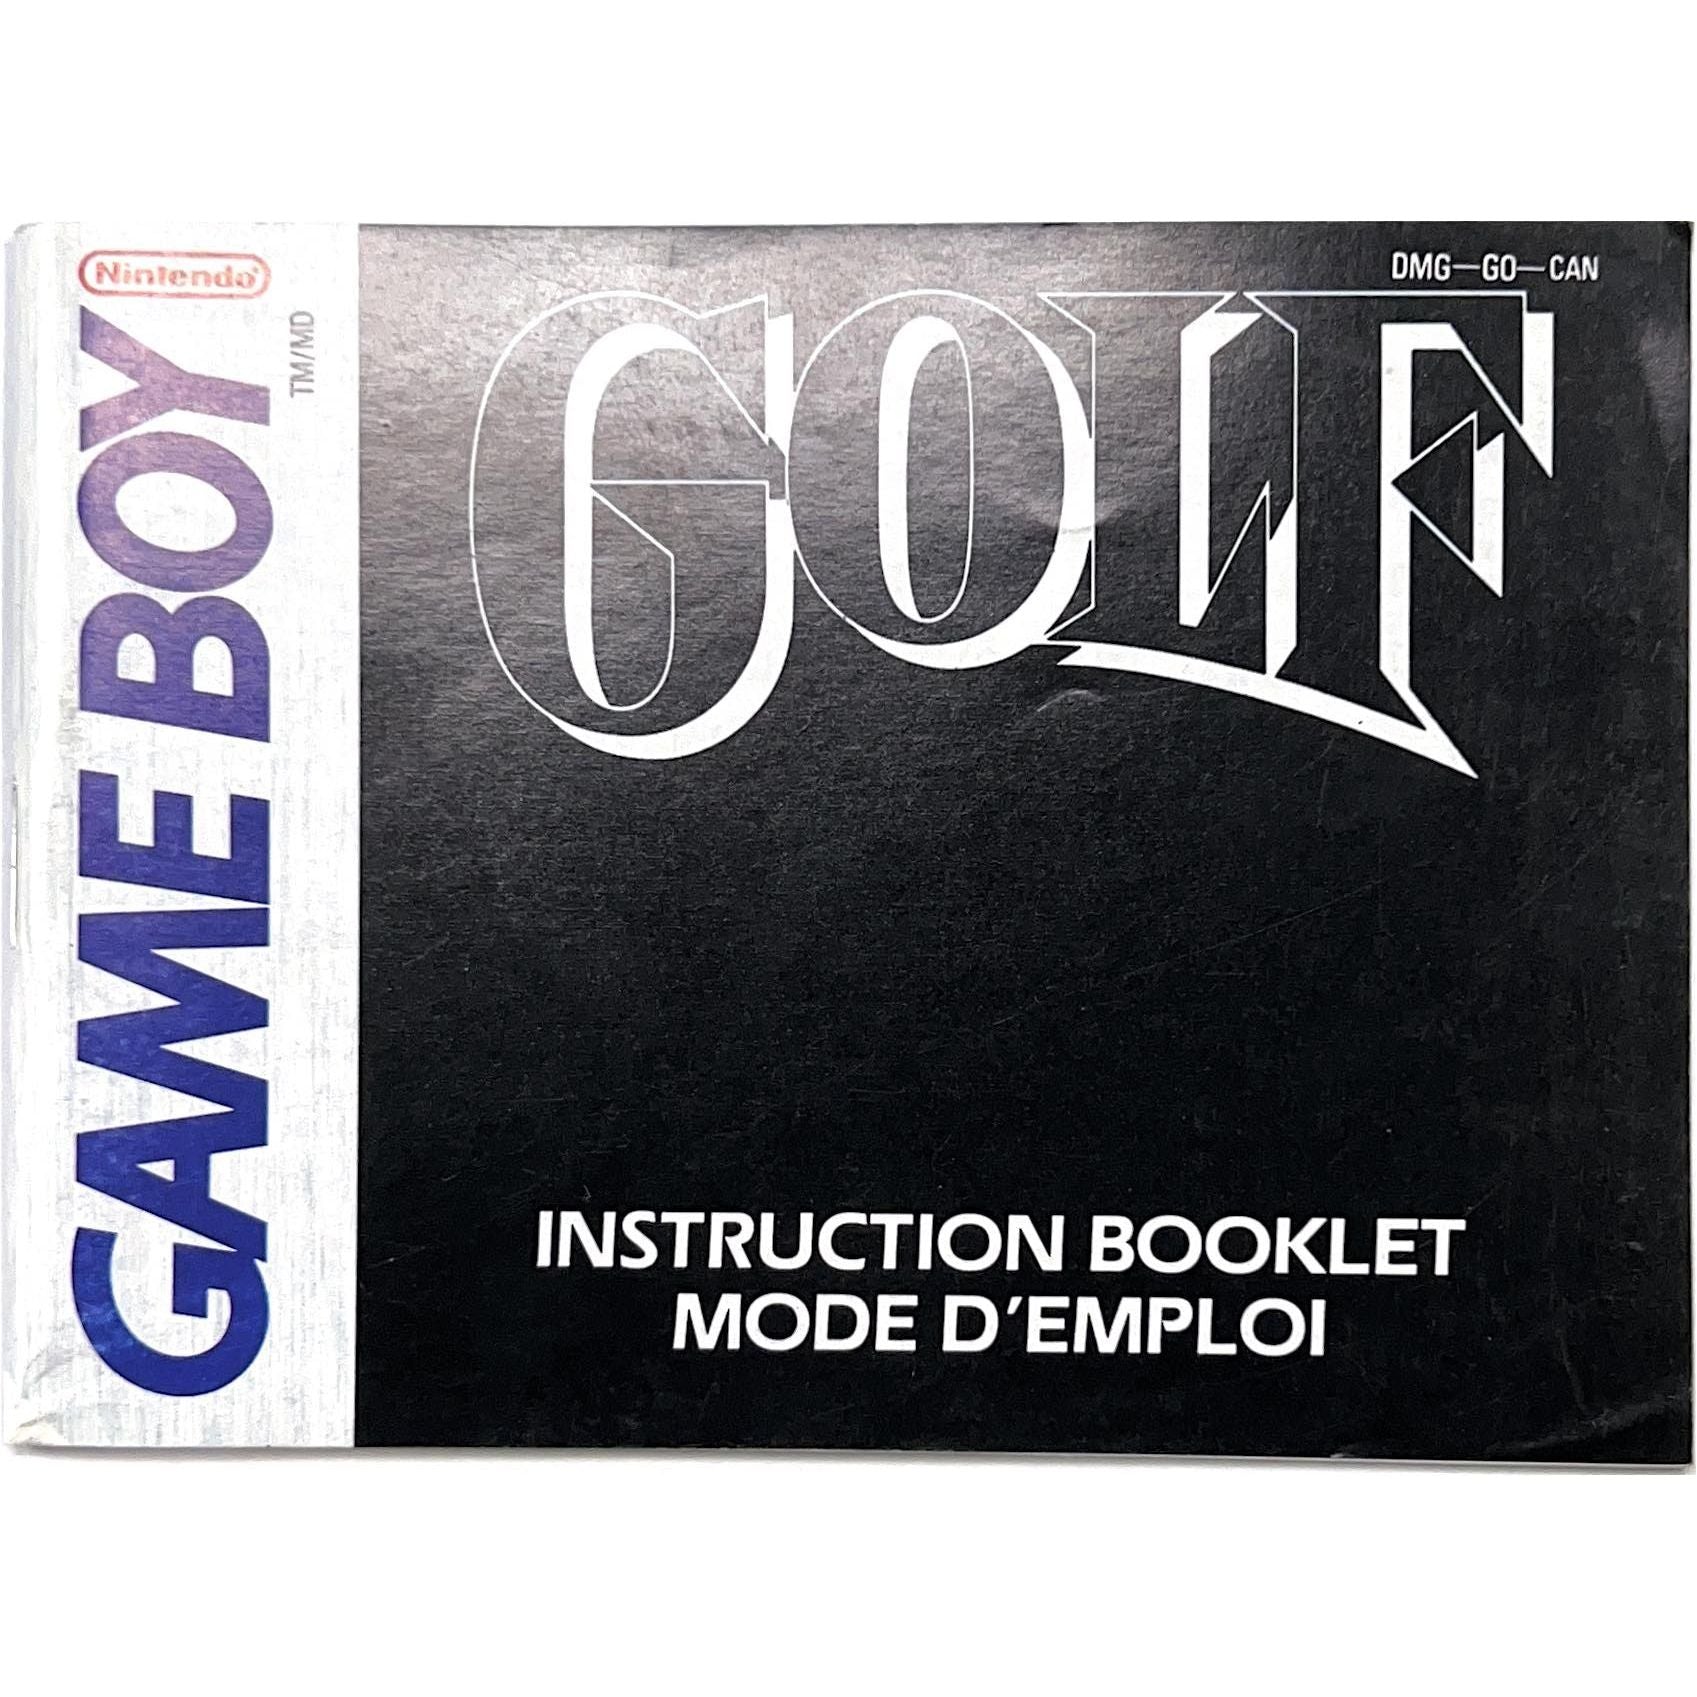 GB - Golf (Manual)